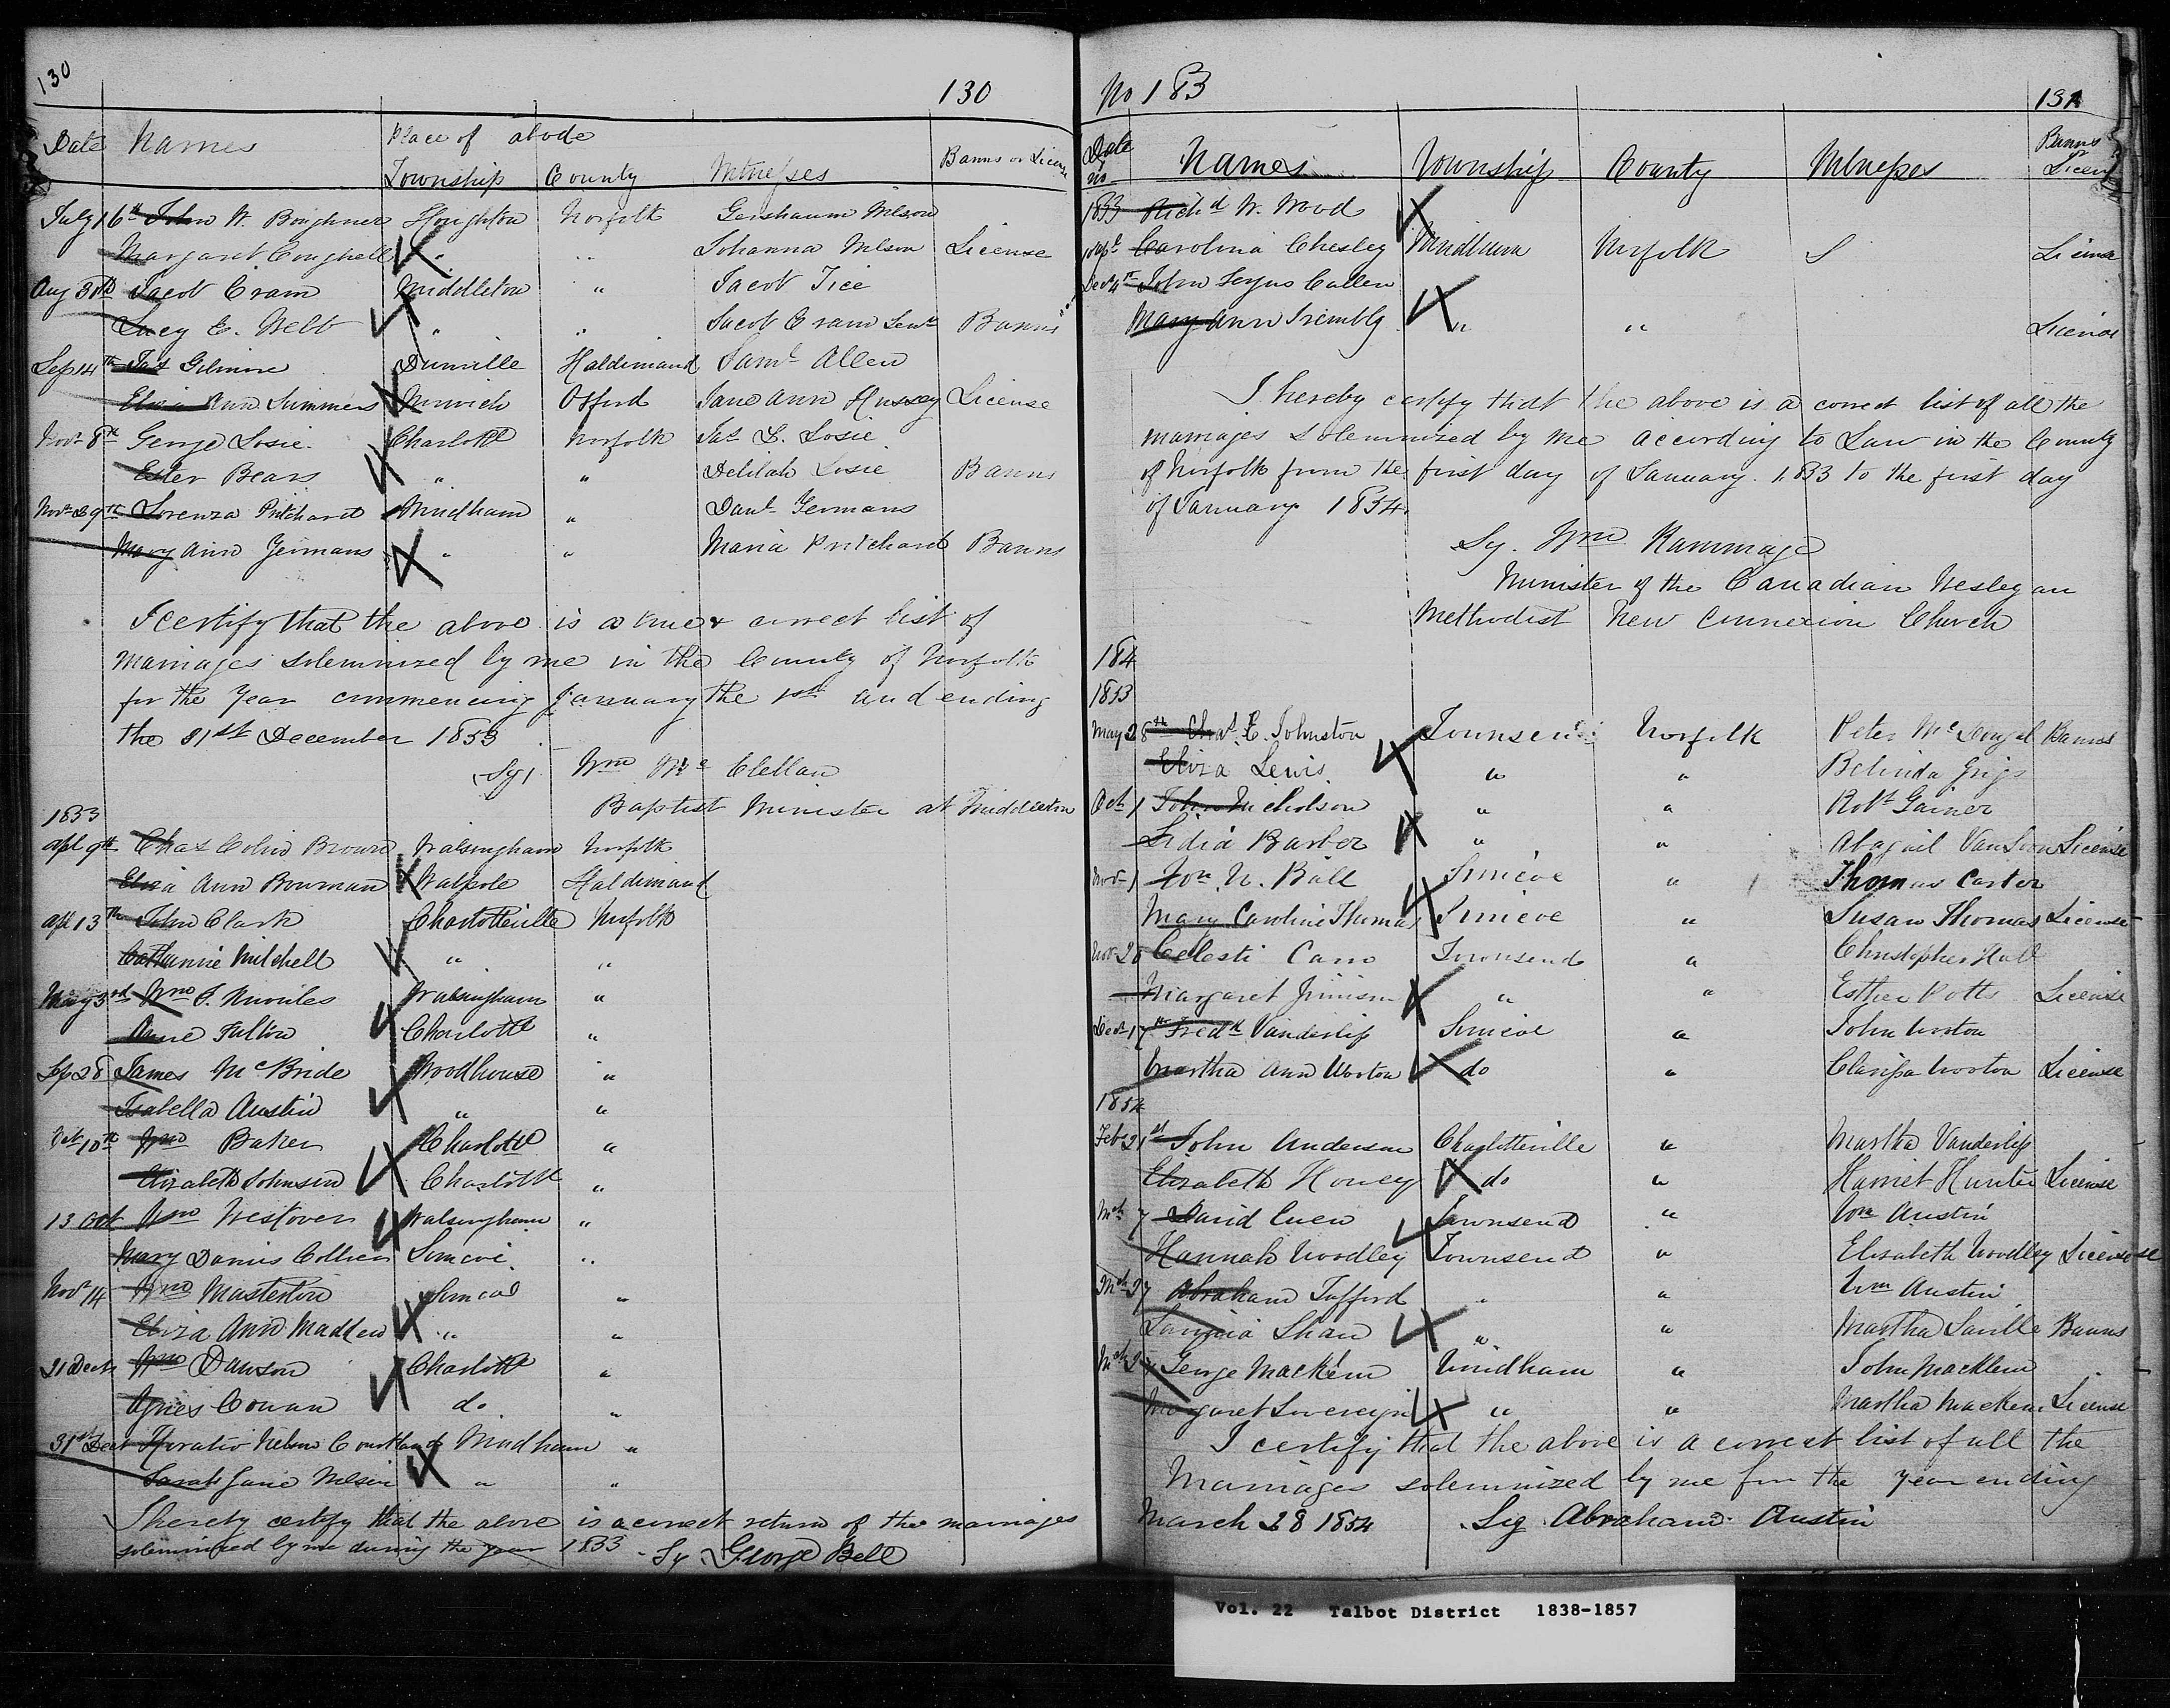 Marriage, James Gilmore to Eliza Ann Summers, 1853, Talbot District, Ontario